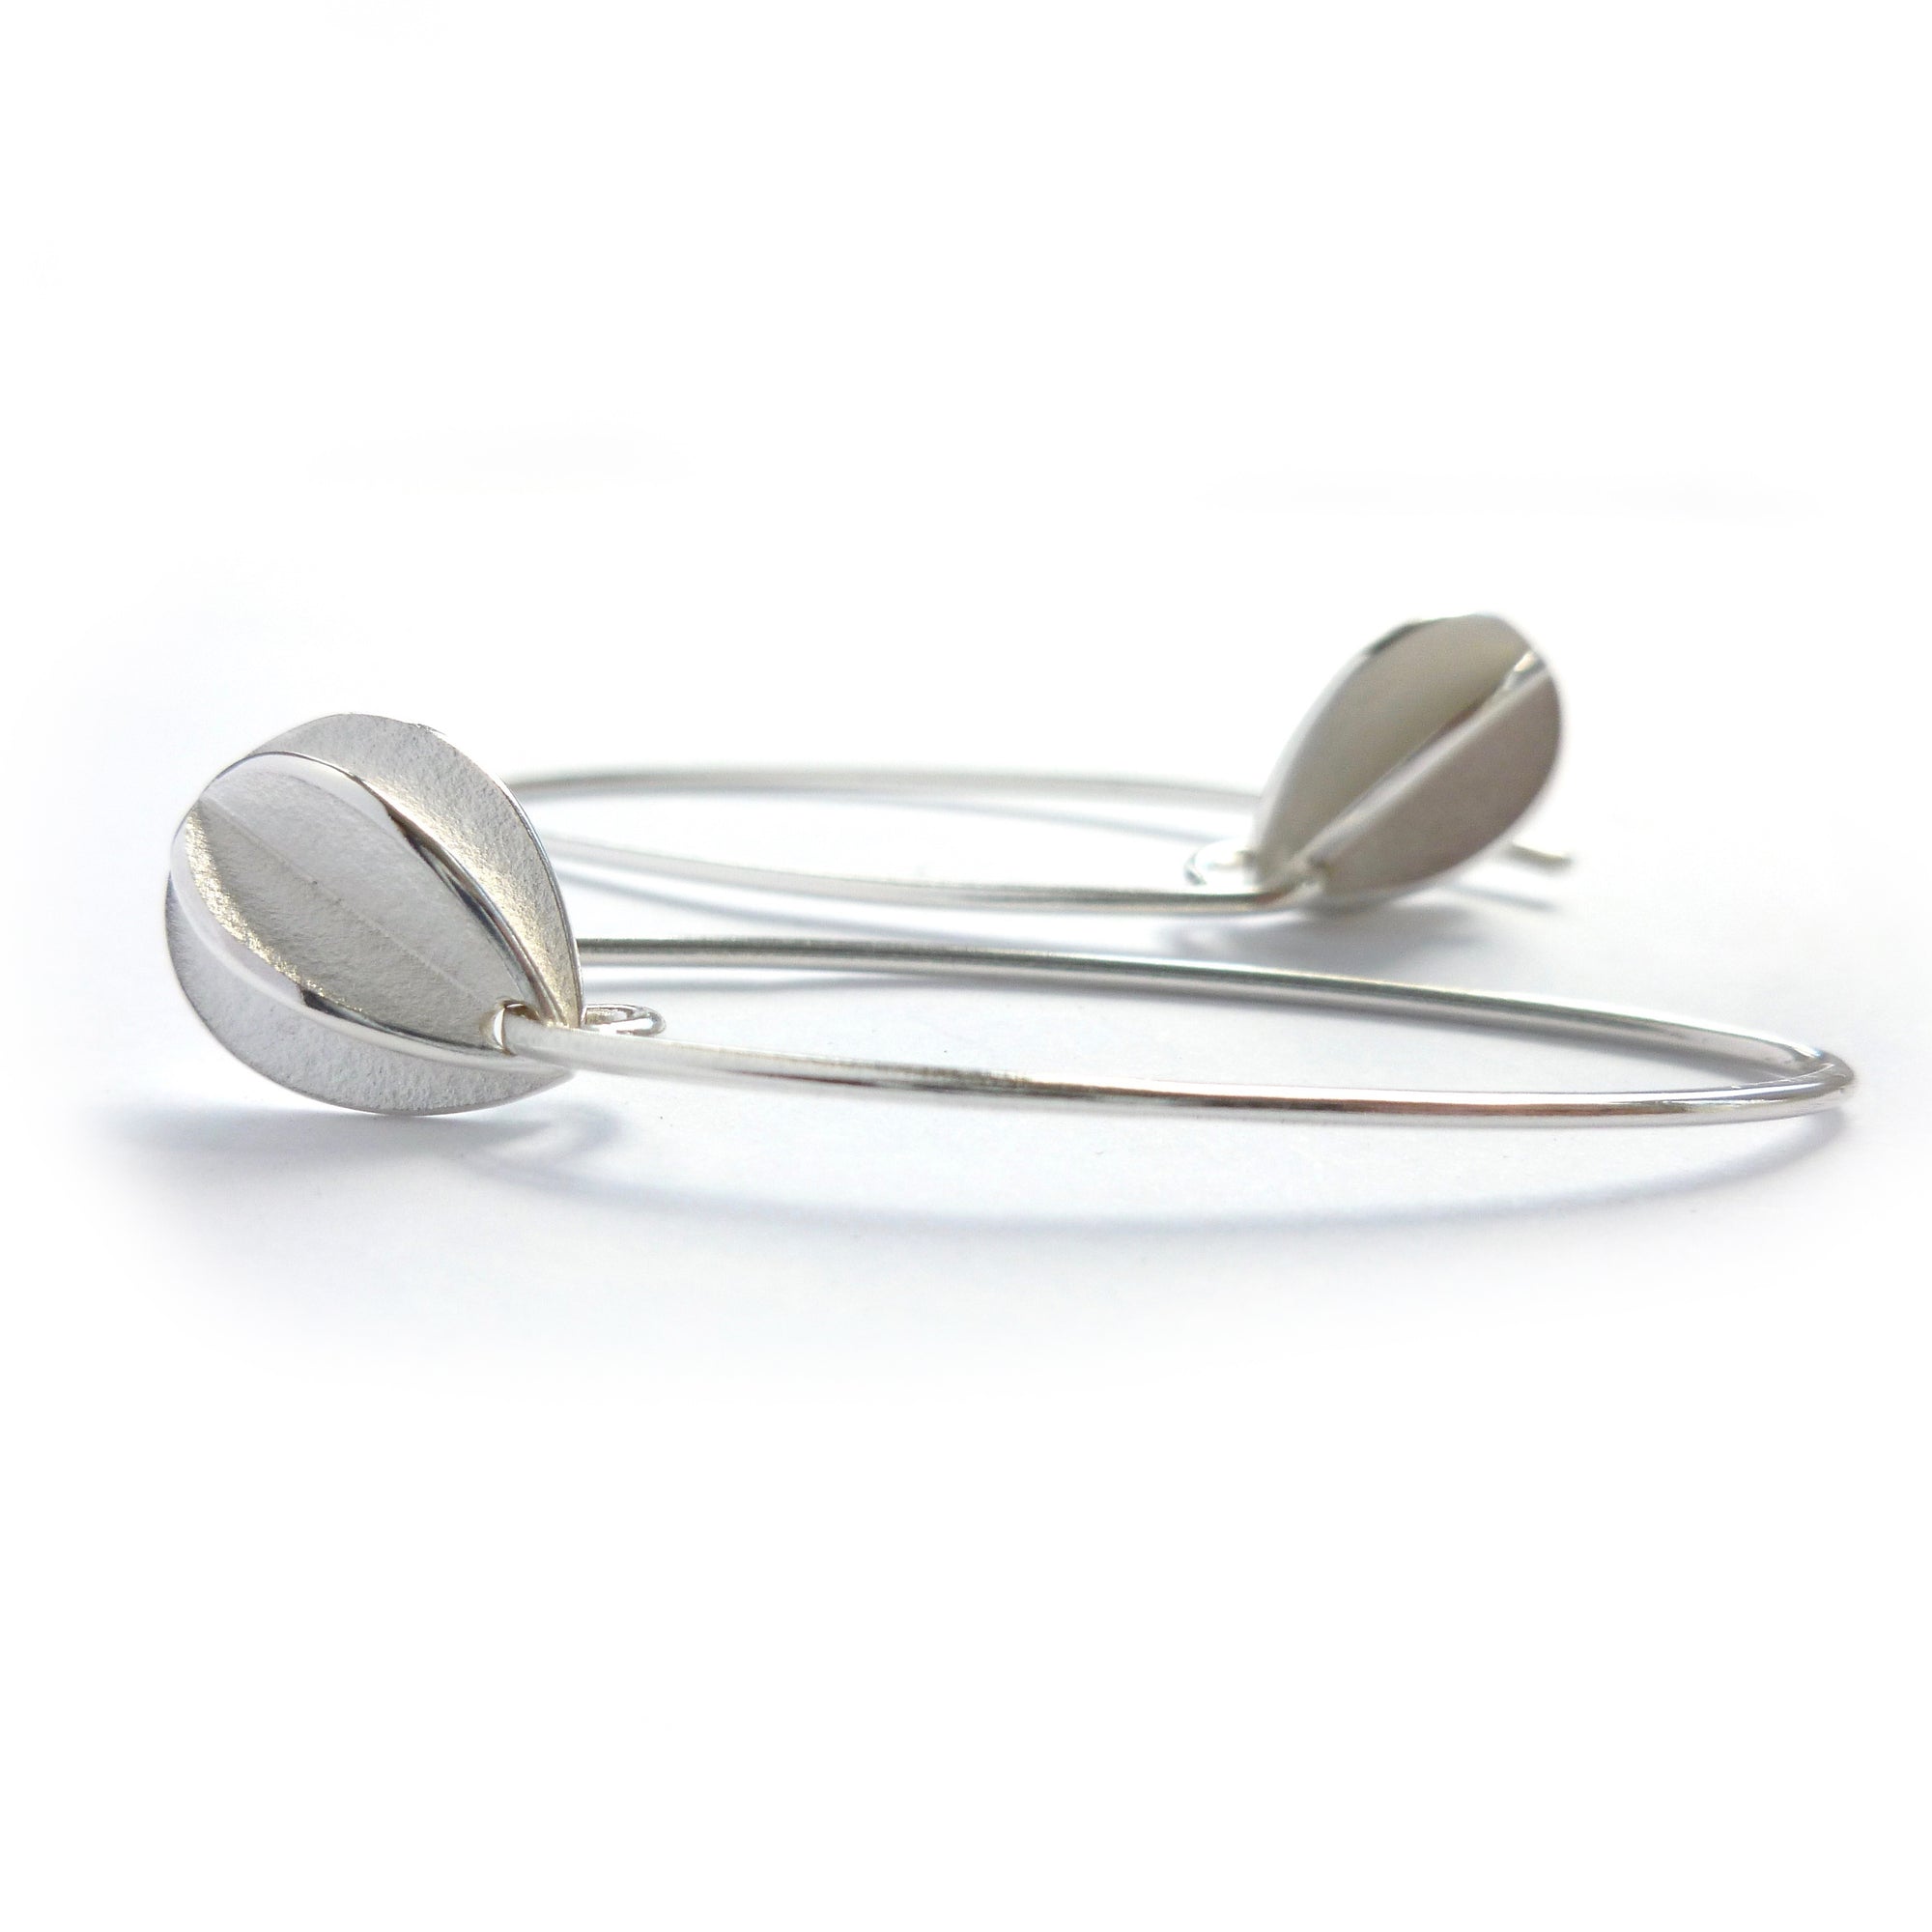 Silver hook earrings - simple and beautiful